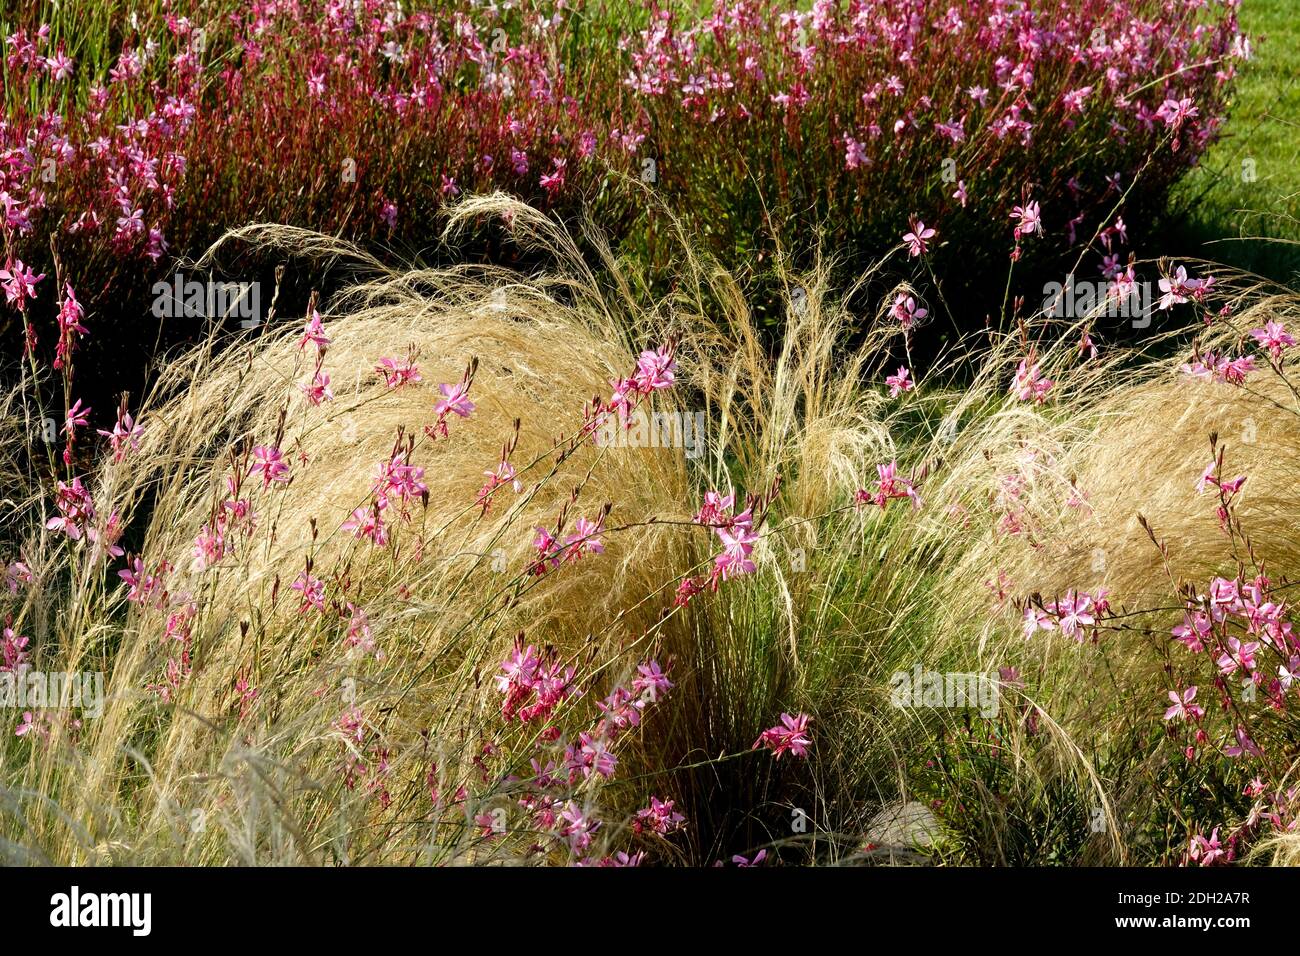 Gaura lindheimeri ornamental grass Stipa Stock Photo